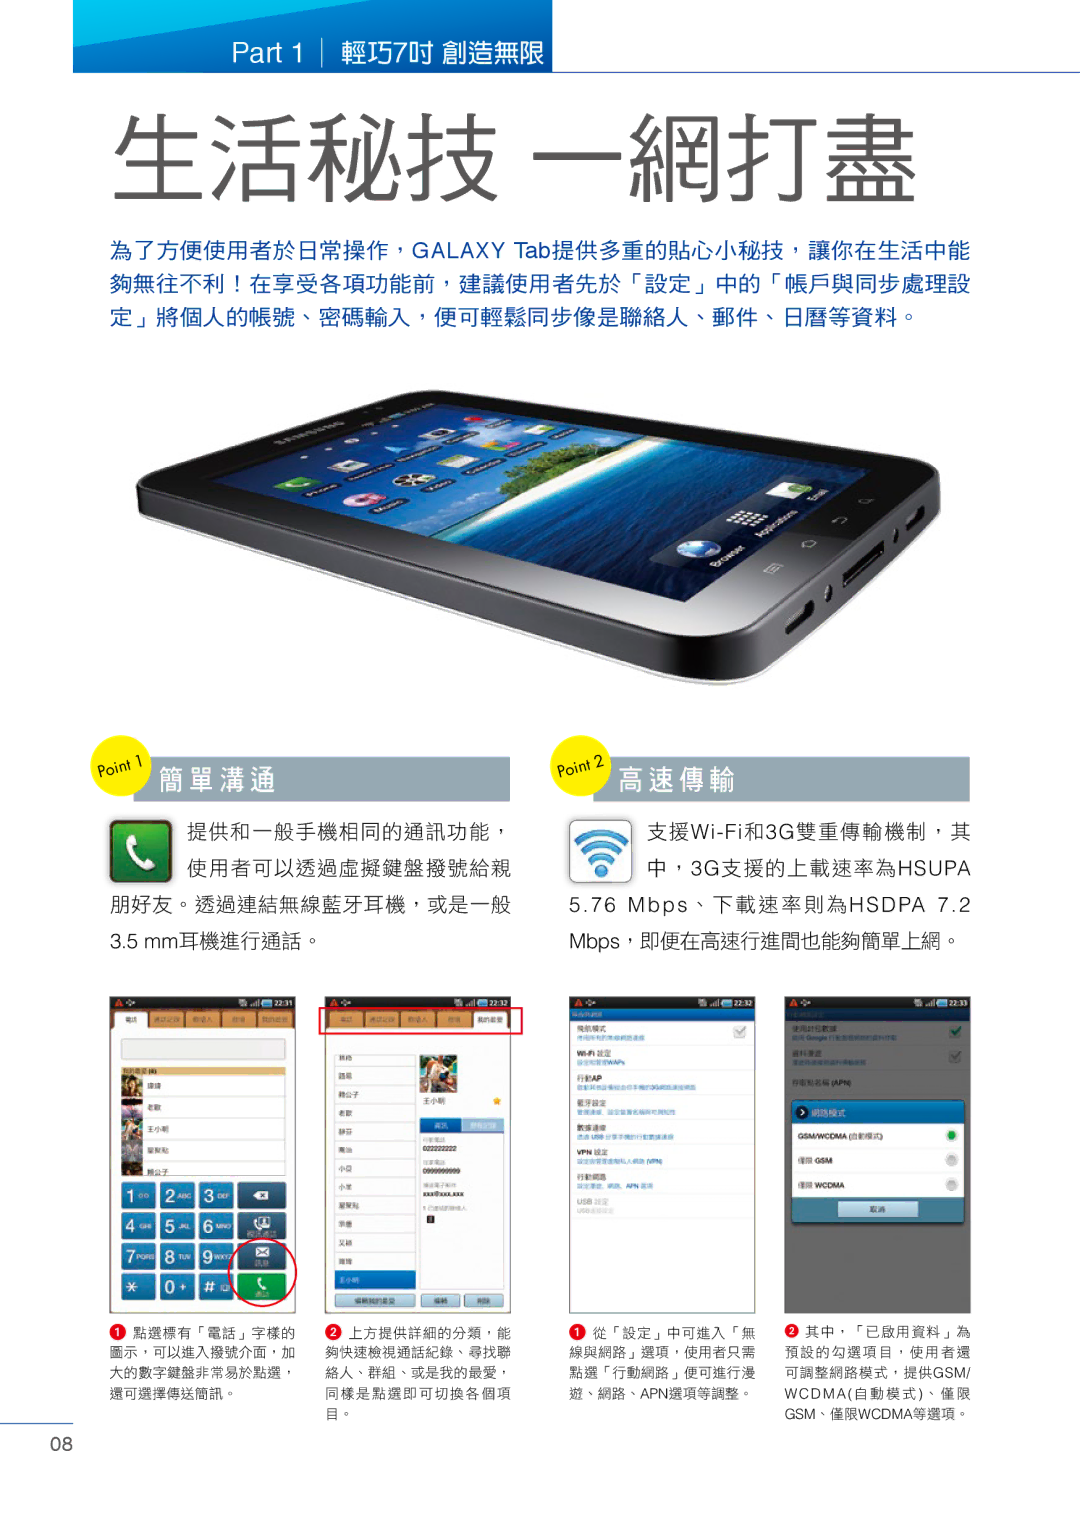 Samsung Tablet manual 生活秘技 一網打盡, 簡單溝通, 高速傳輸 